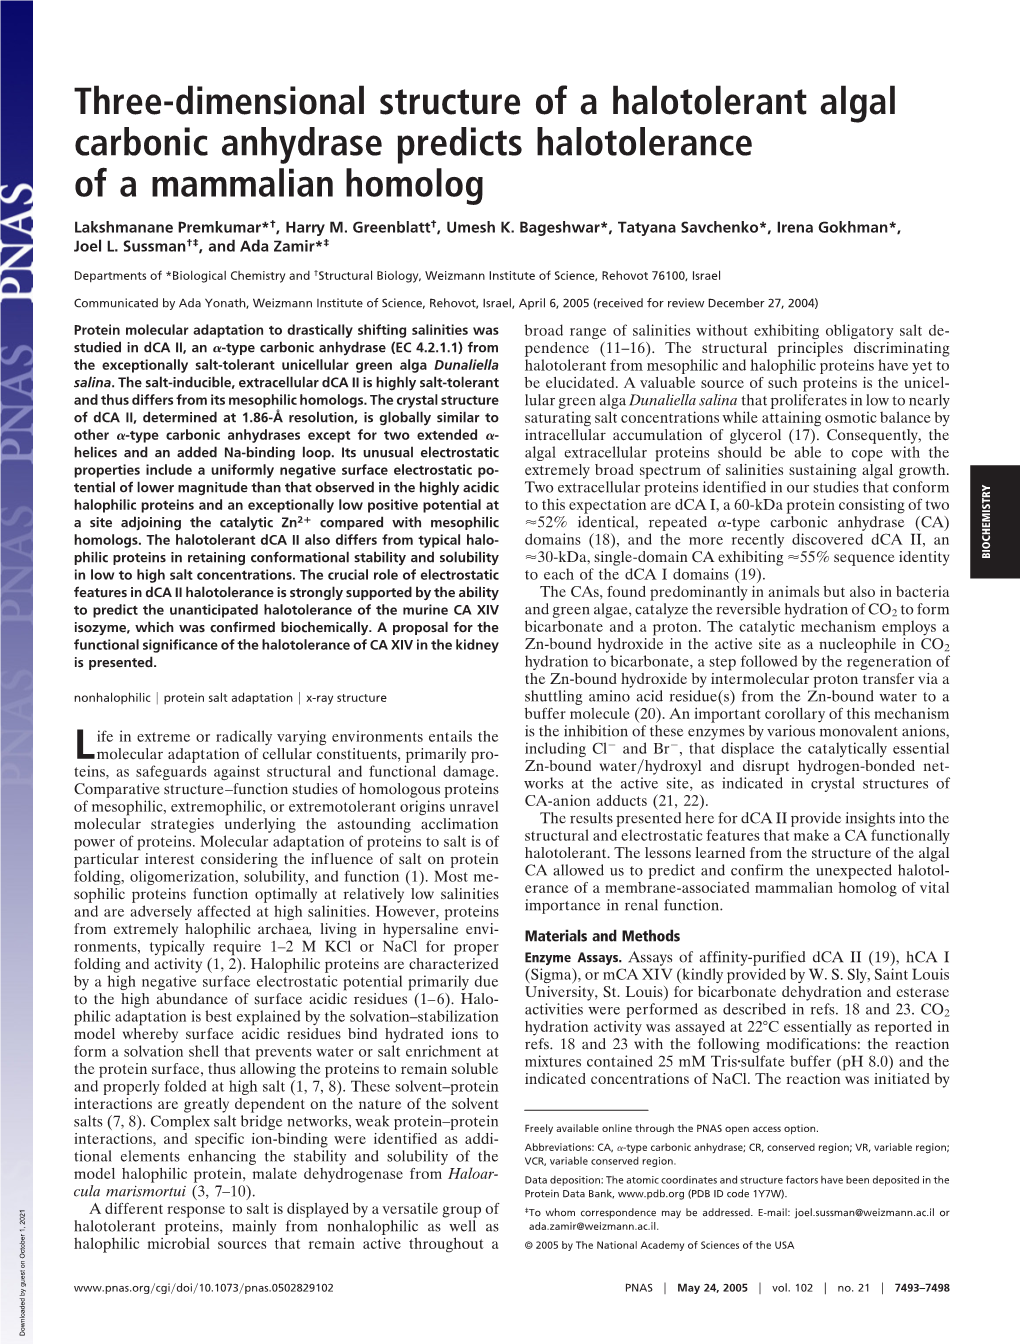 Three-Dimensional Structure of a Halotolerant Algal Carbonic Anhydrase Predicts Halotolerance of a Mammalian Homolog